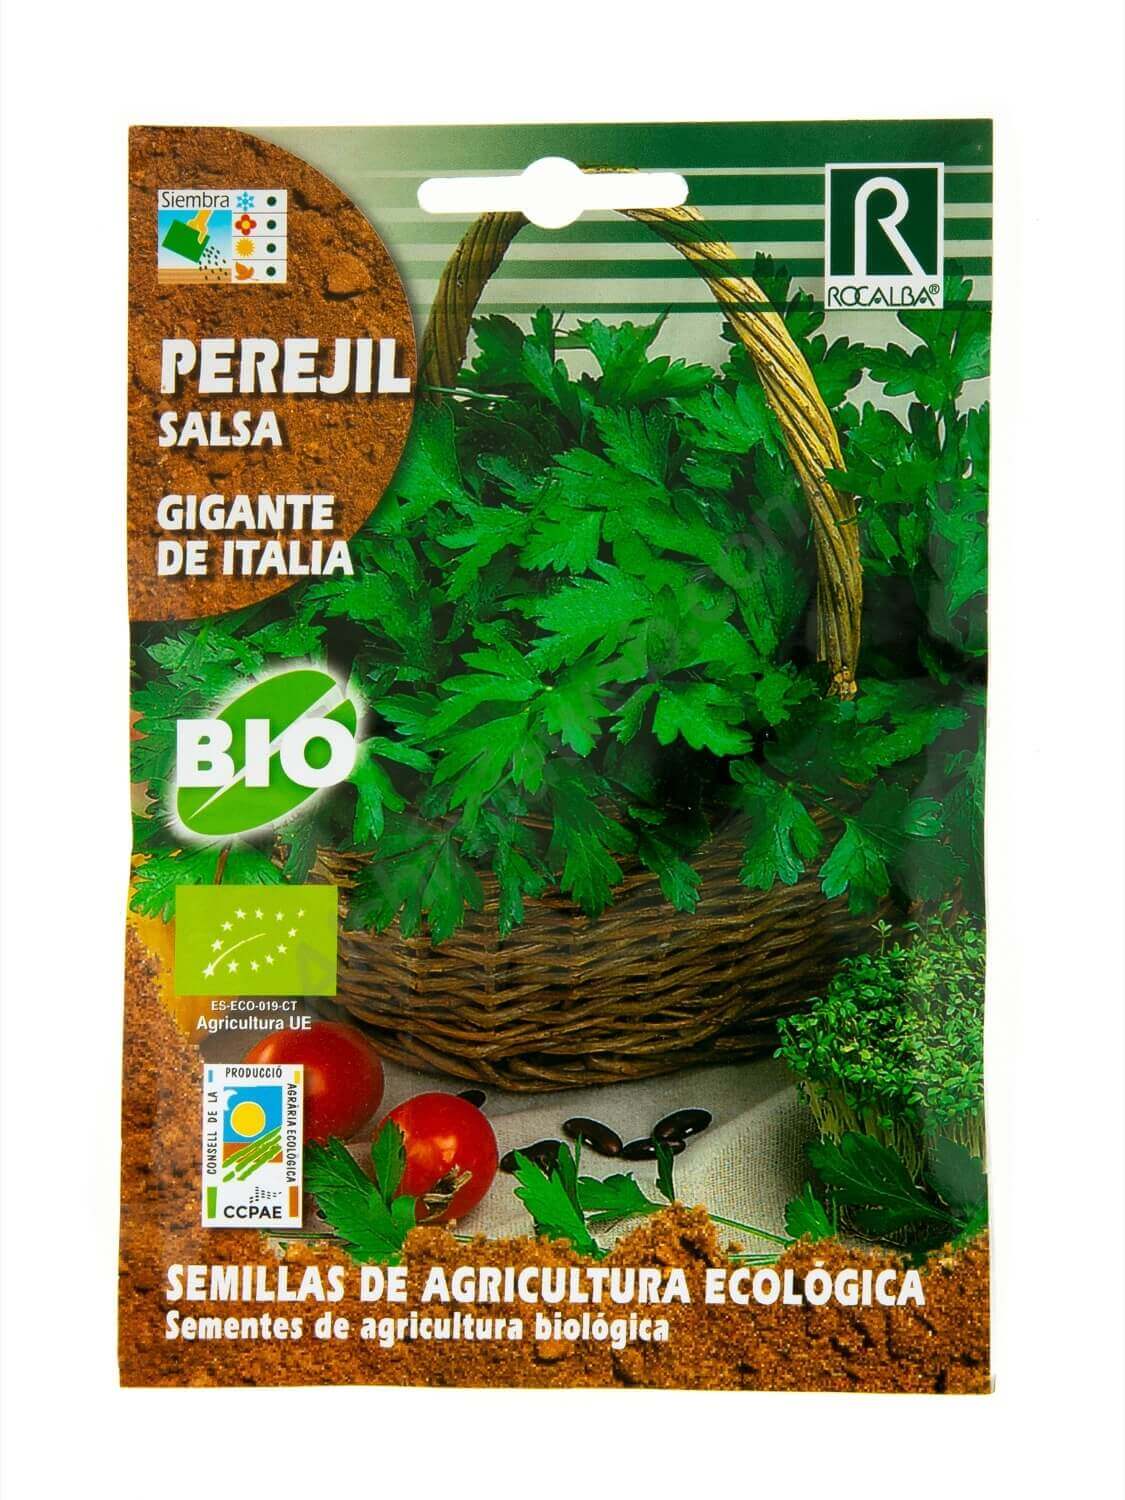 Rocalba organic Giant Italian Parsley